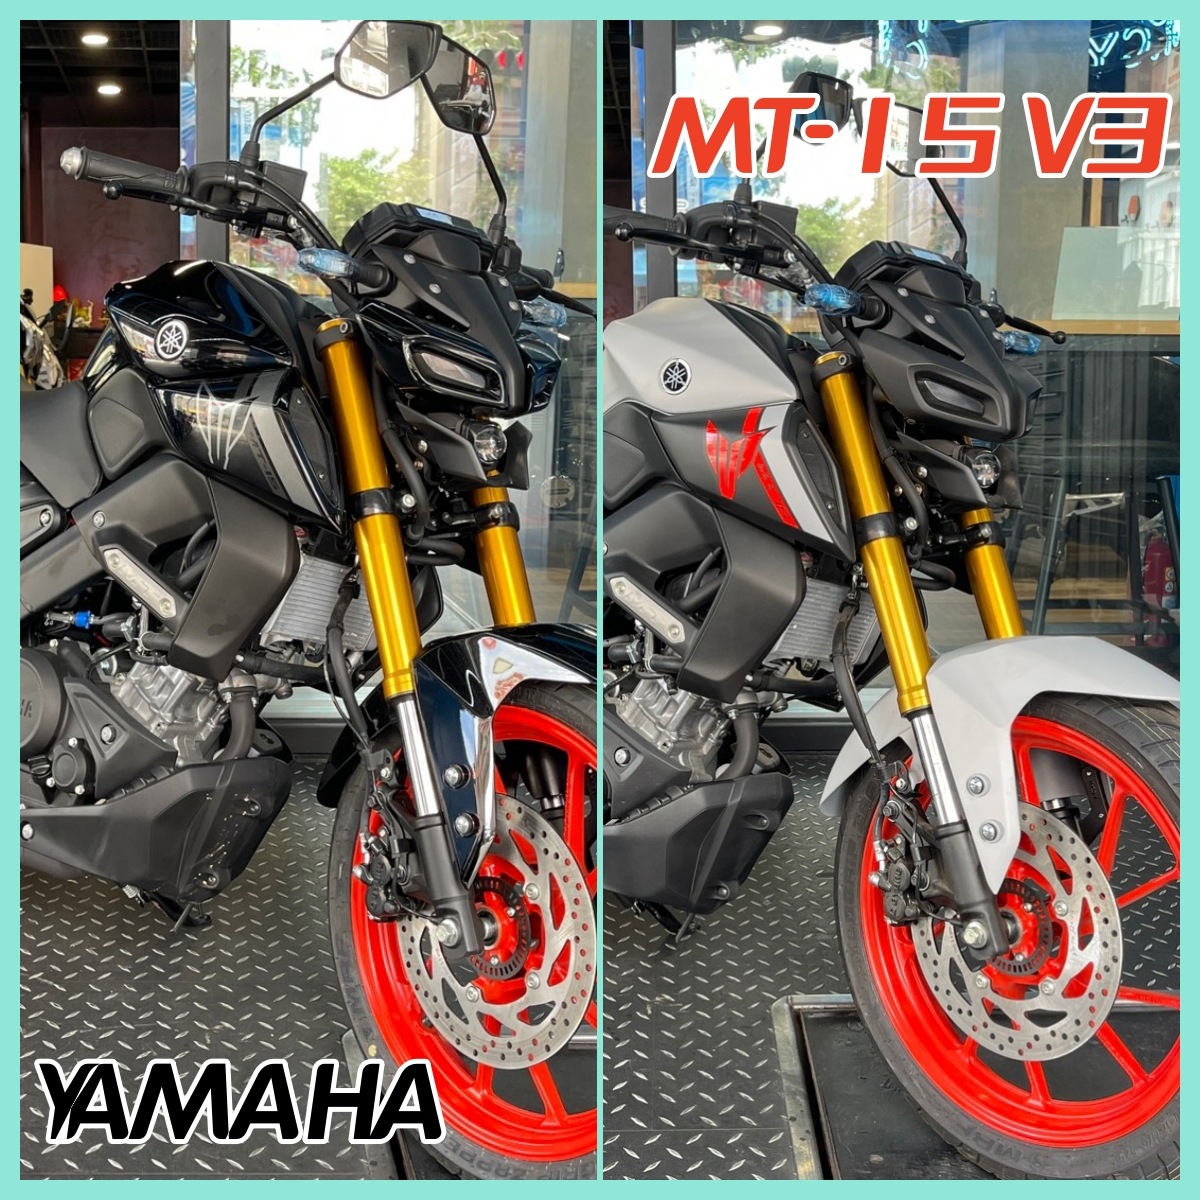 【飛翔國際】YAMAHA MT-15 - 「Webike-摩托車市」 2023 MT-15 V3 新車 (YAMAHA) 全新車 可領牌 不用等 MT15